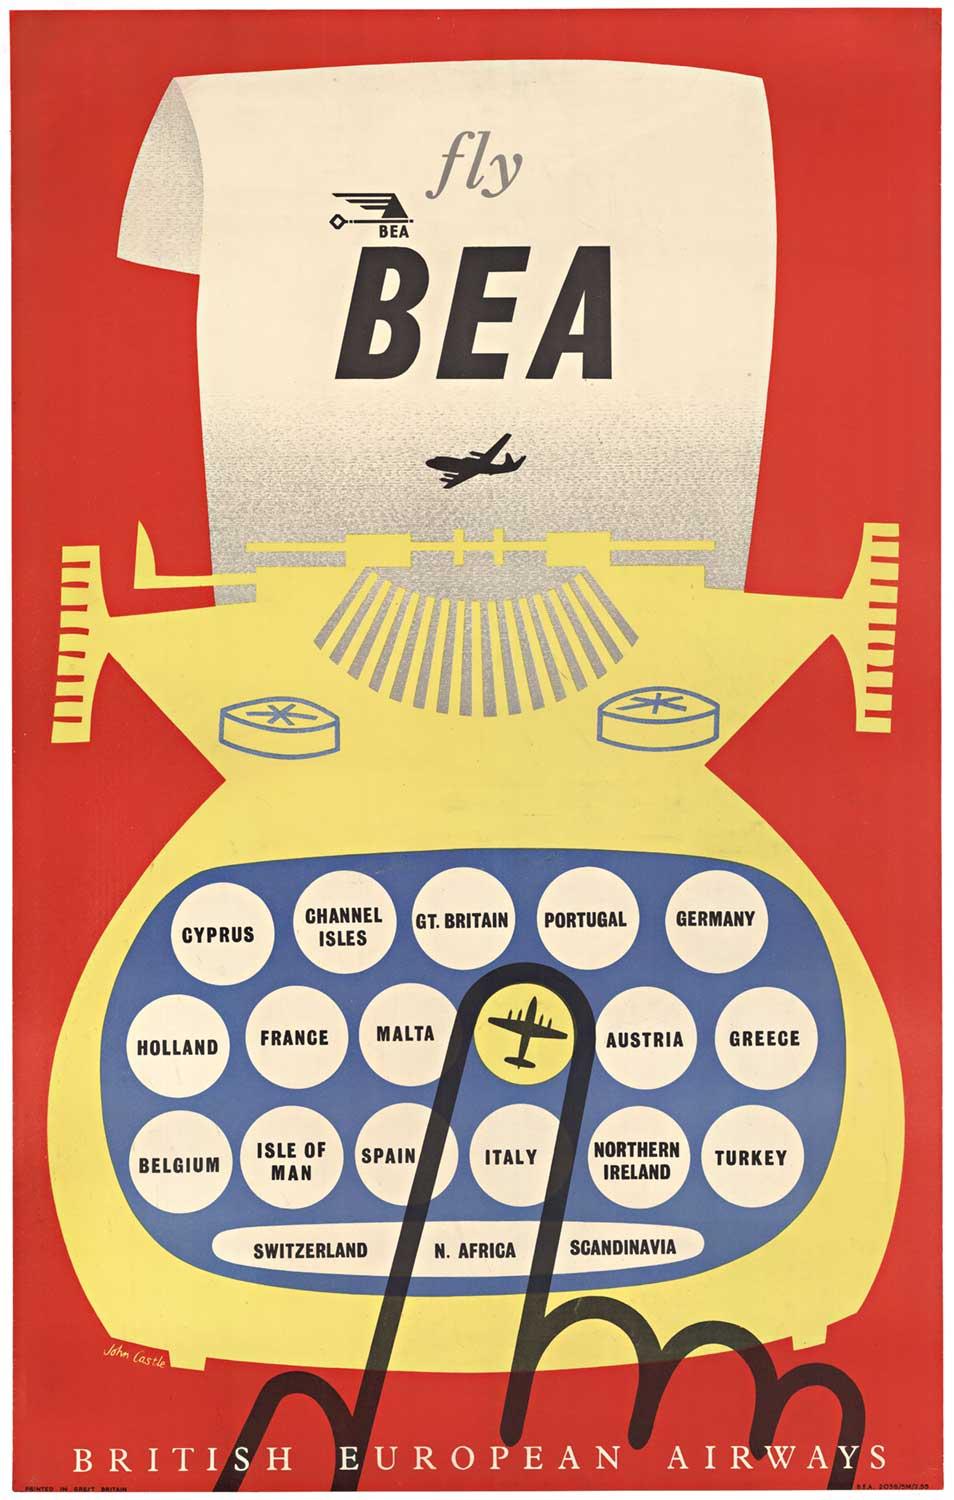 Original "Fly Bea, British Overseas Airways" vintage poster